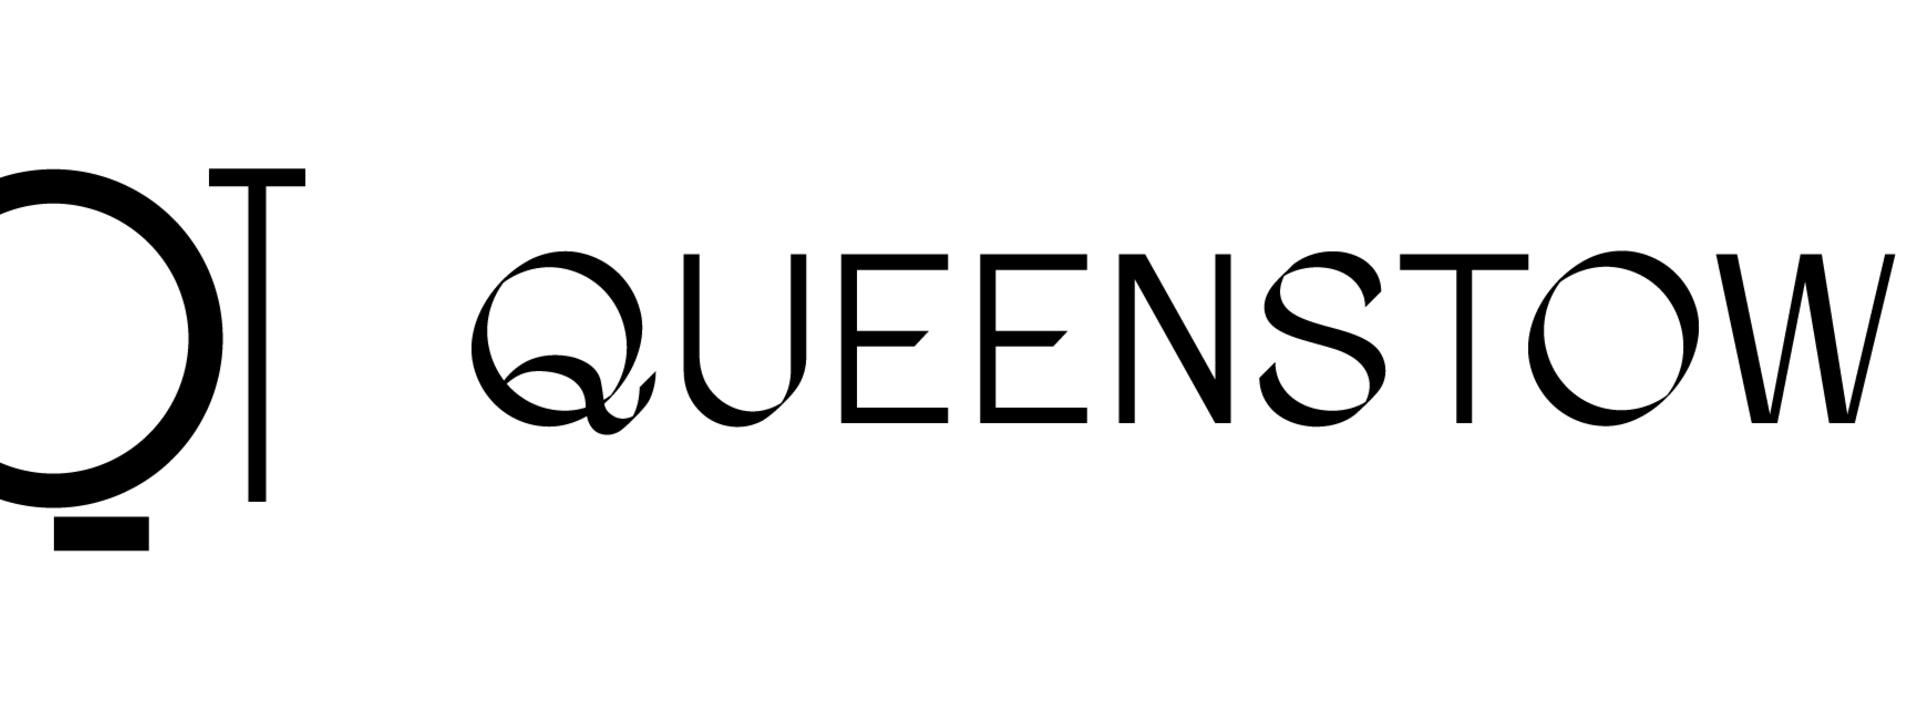 qt-queenstown-logo-01-black-rgb.jpg